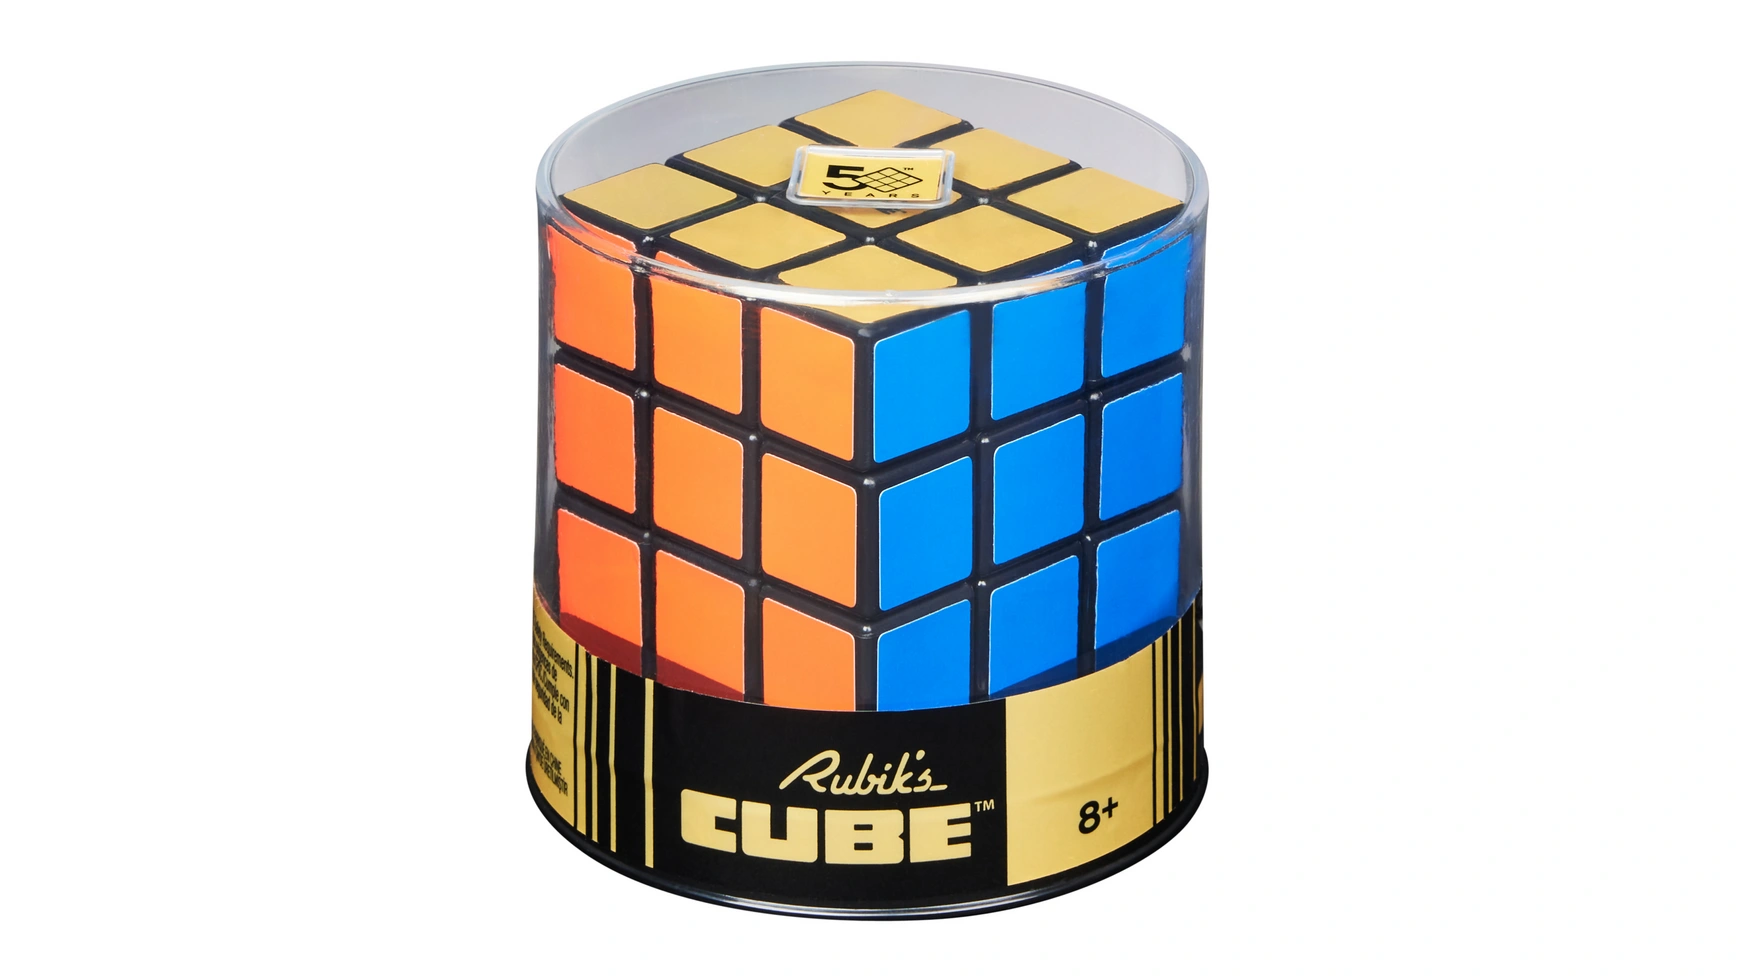 Ретро-кубик Рубика 3x3 Кубик Рубика кубик 3x3, внешний вид которого напоминает оригинал 50-летней давности Spin Master кубик рубика qiyi warrior w 3x3x3 профессиональный скоростной кубик головоломка 3x3